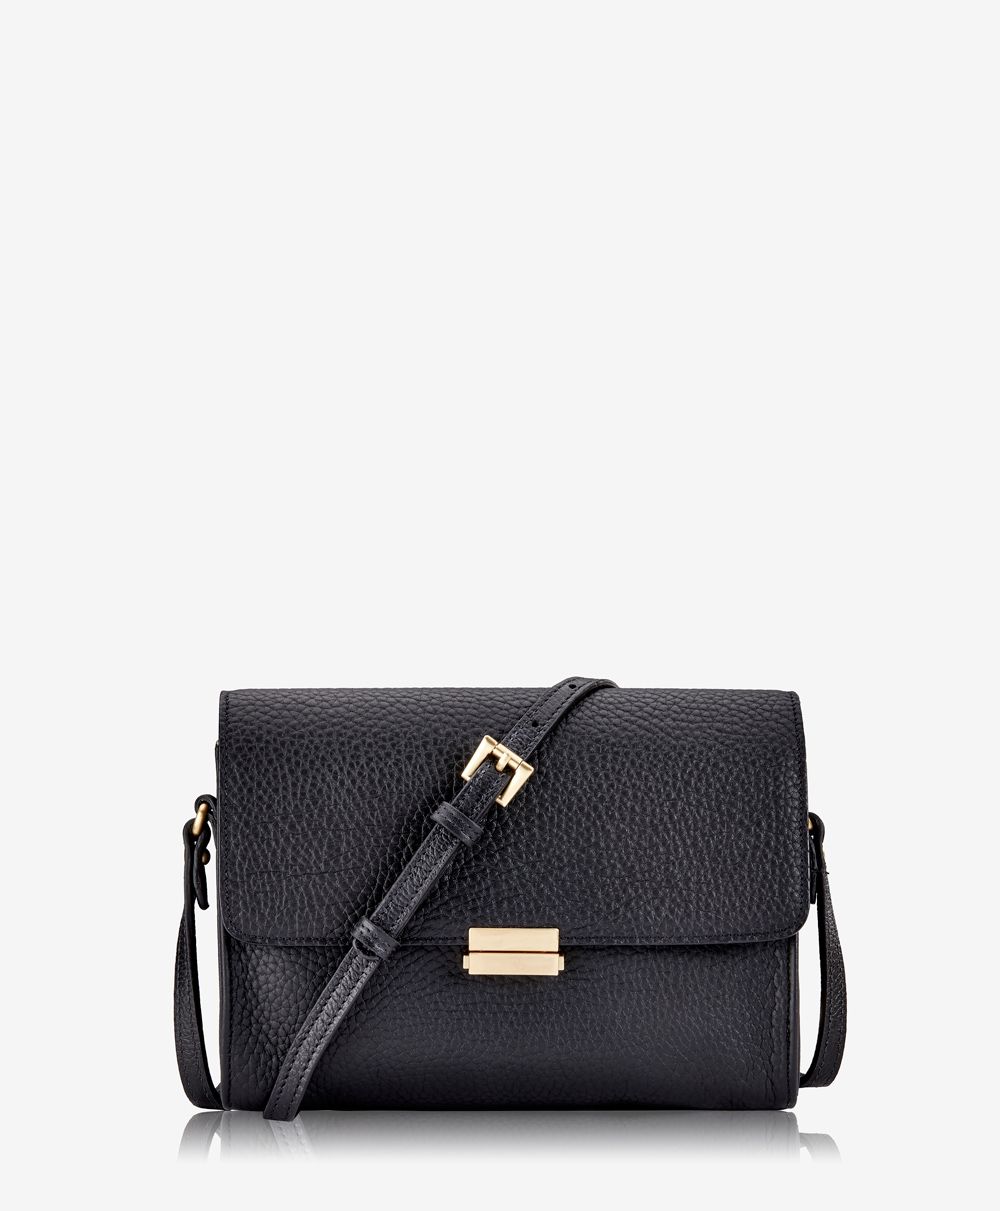 Catherine Crossbody Handbag Black Pebble Grain Leather | GiGi New York